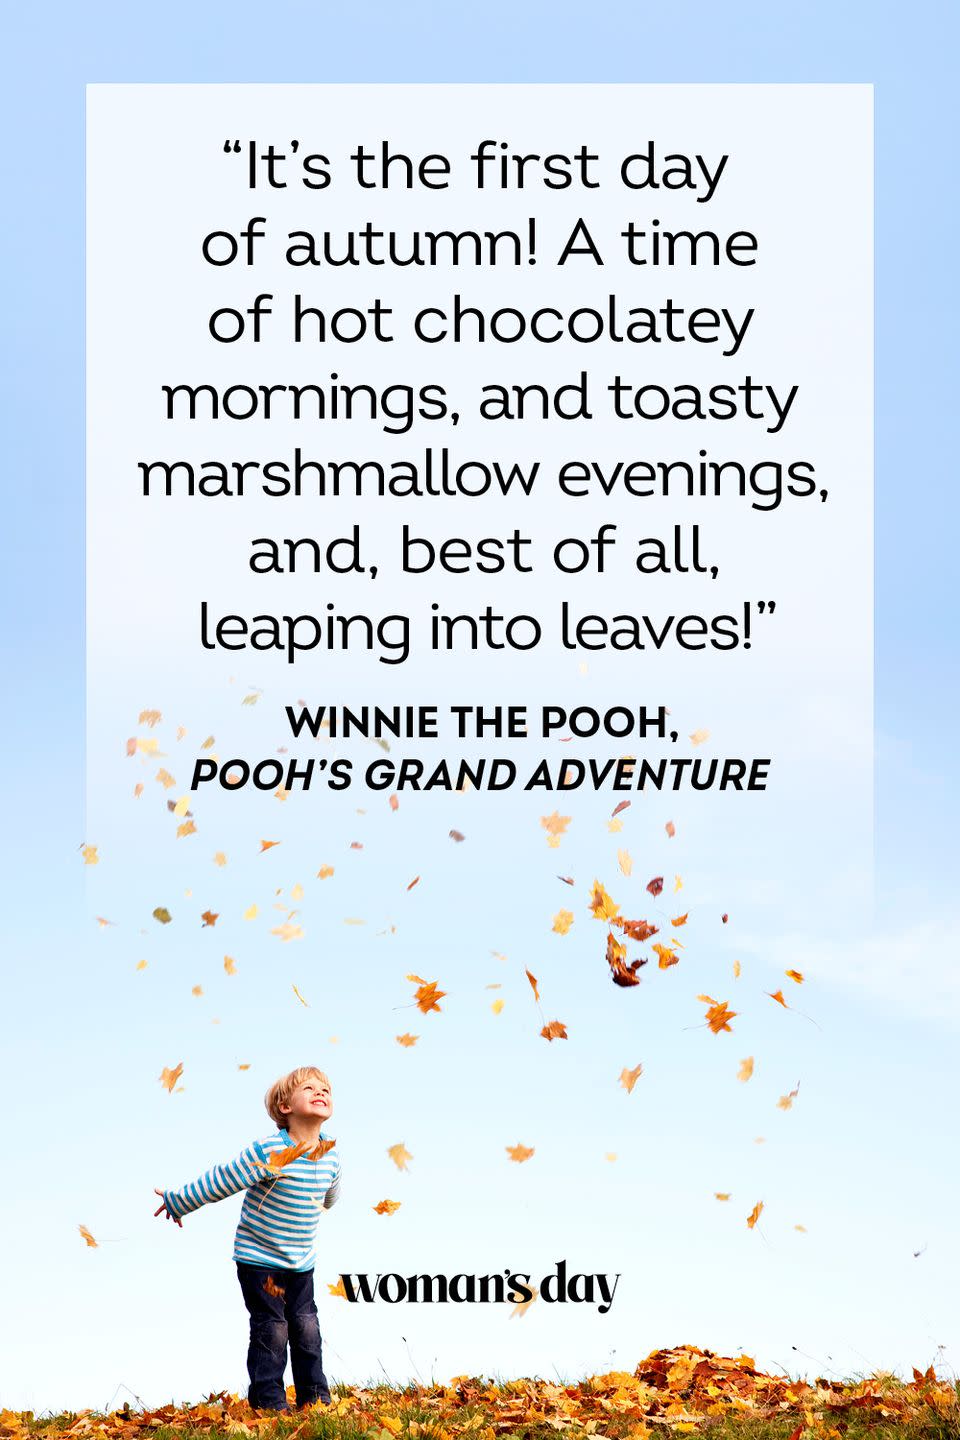 9) Winnie the Pooh, Pooh’s Grand Adventure